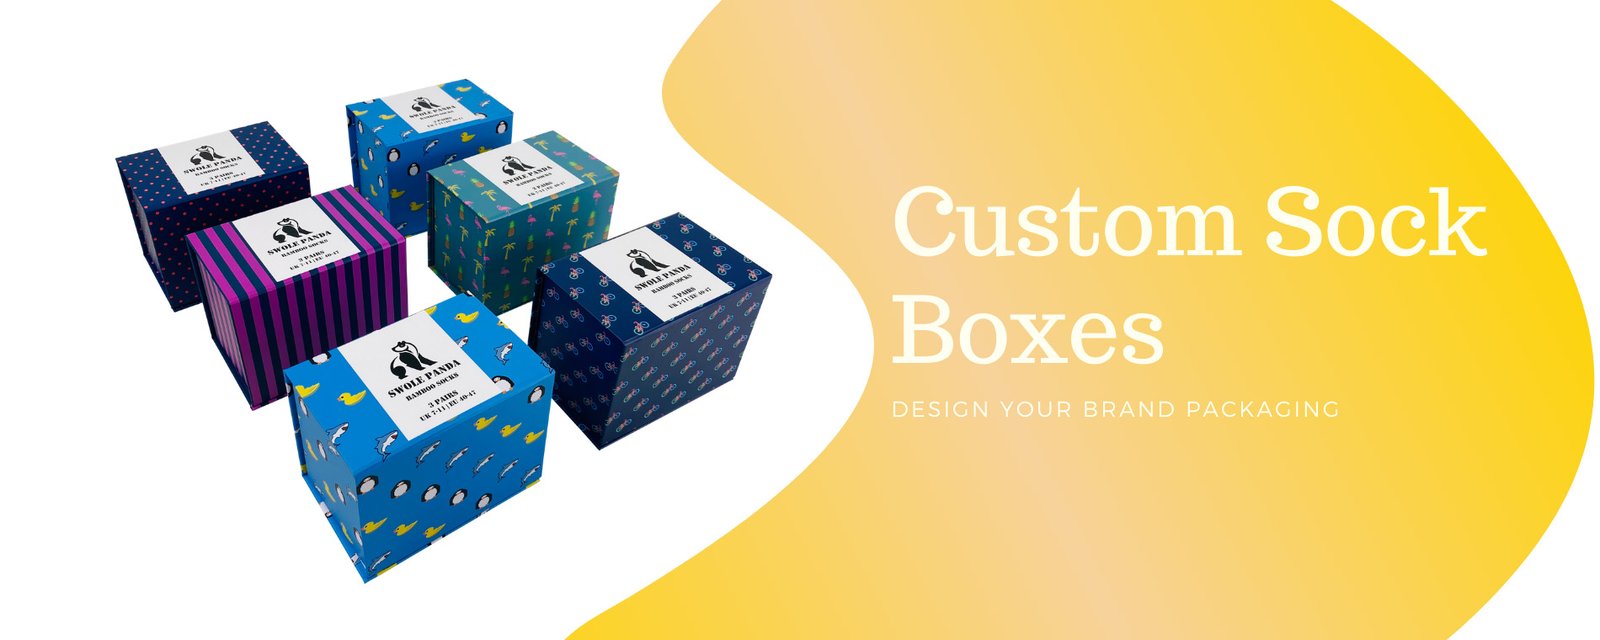 Custom Sock Boxes Brand Packaging